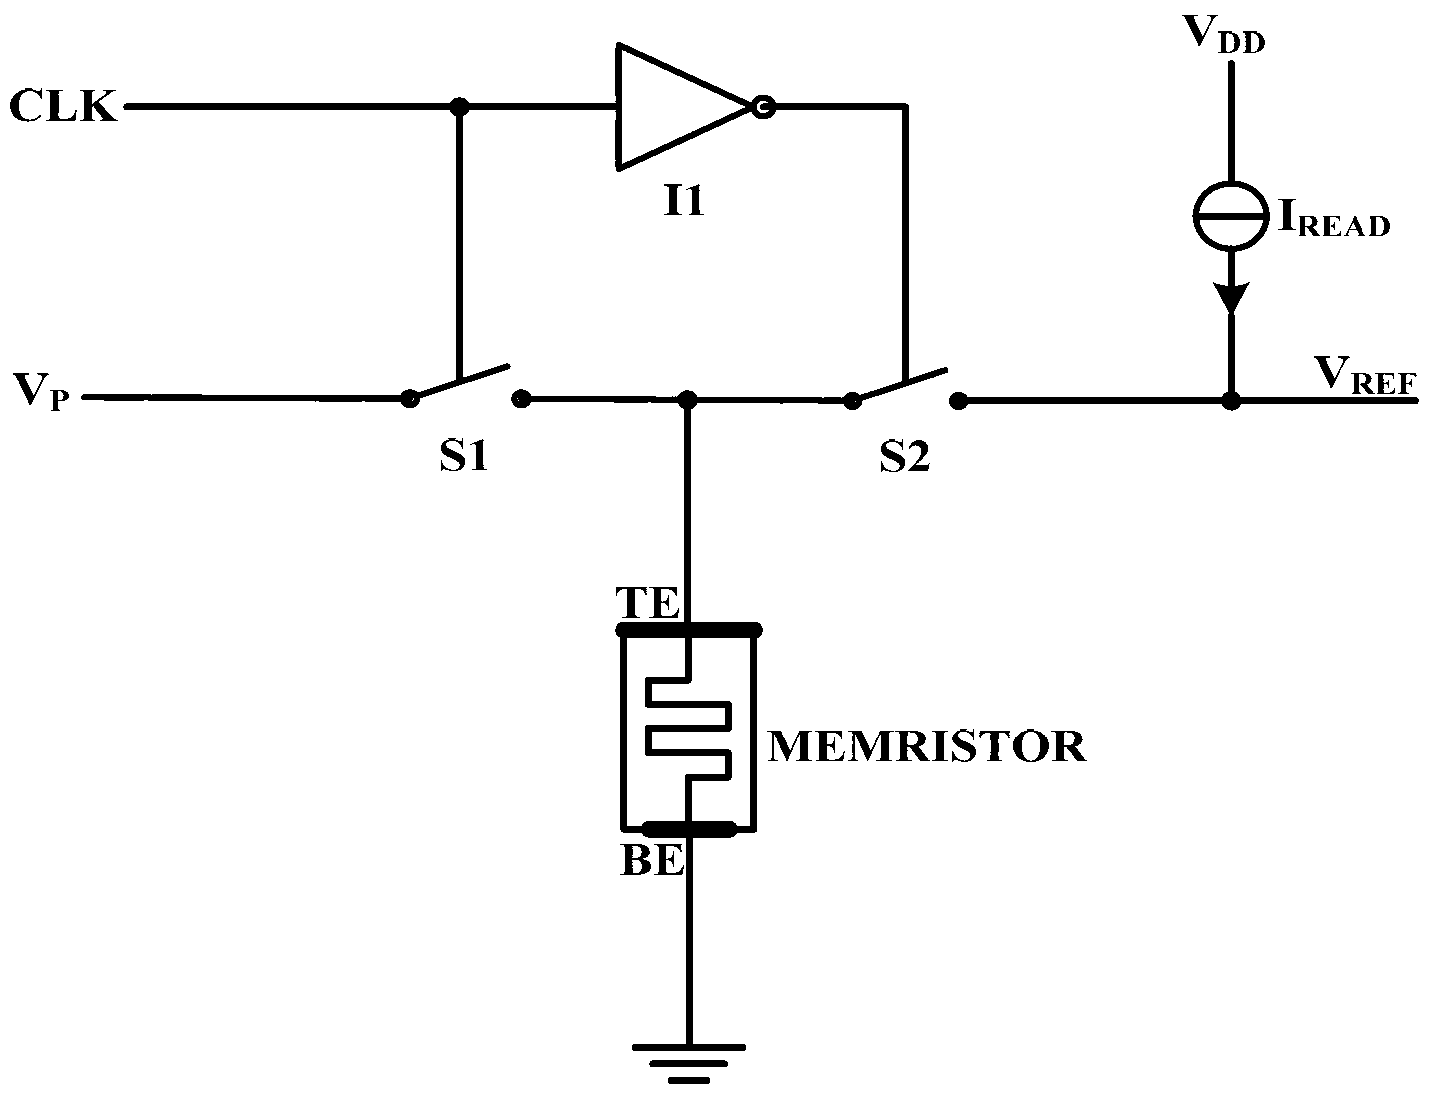 Analog-digital converter based on memristor